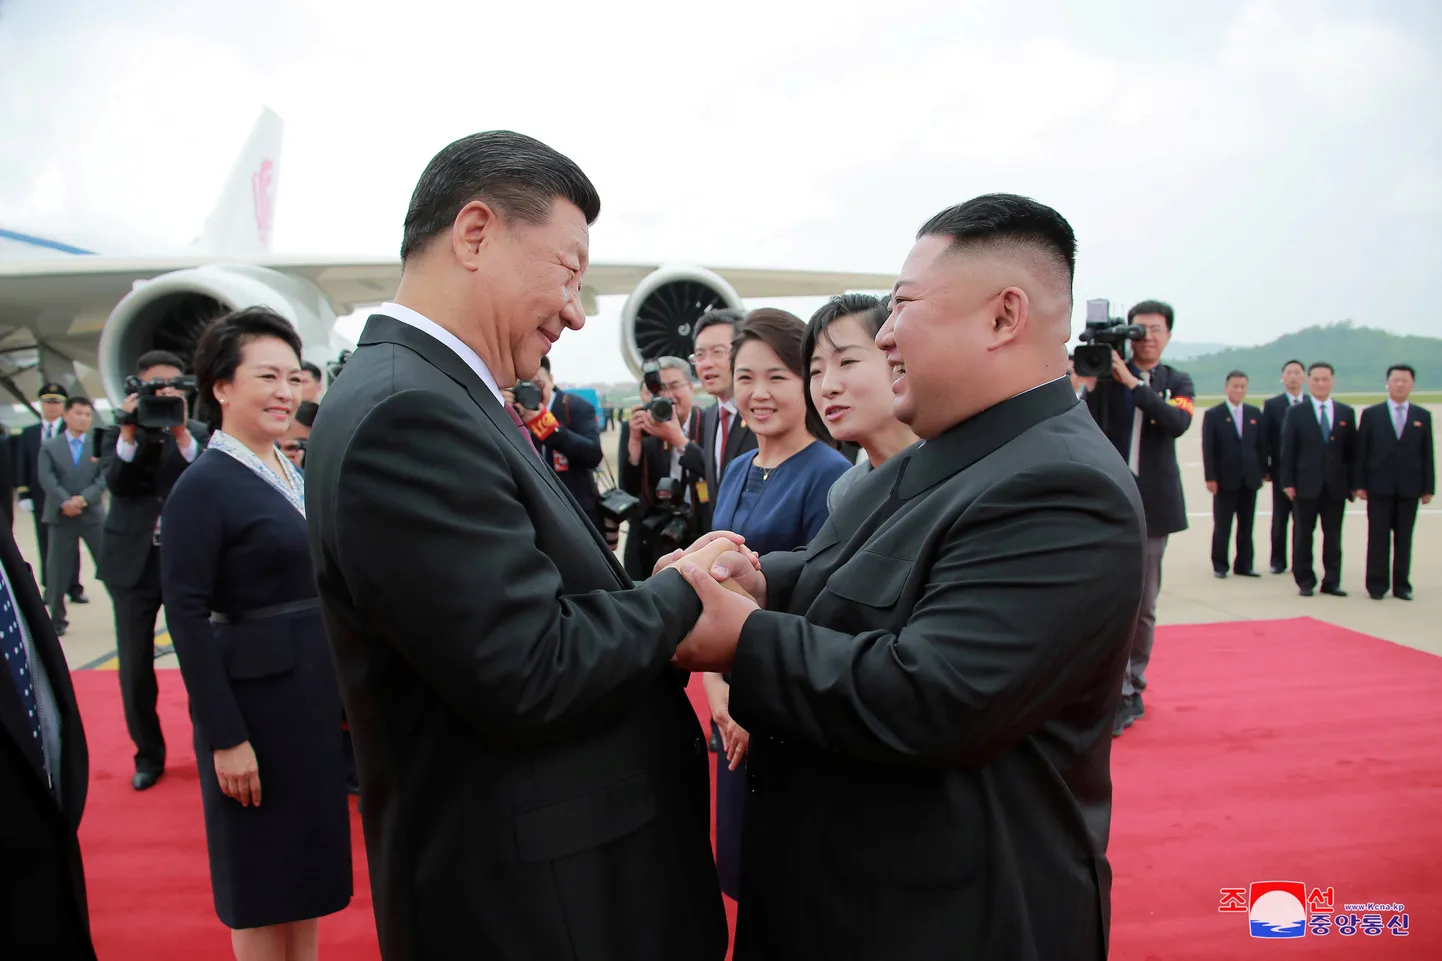 Põhja-Korea liider Kim Jong-un (paremal) tervitab Hiina presidenti Xi Jinpingi.